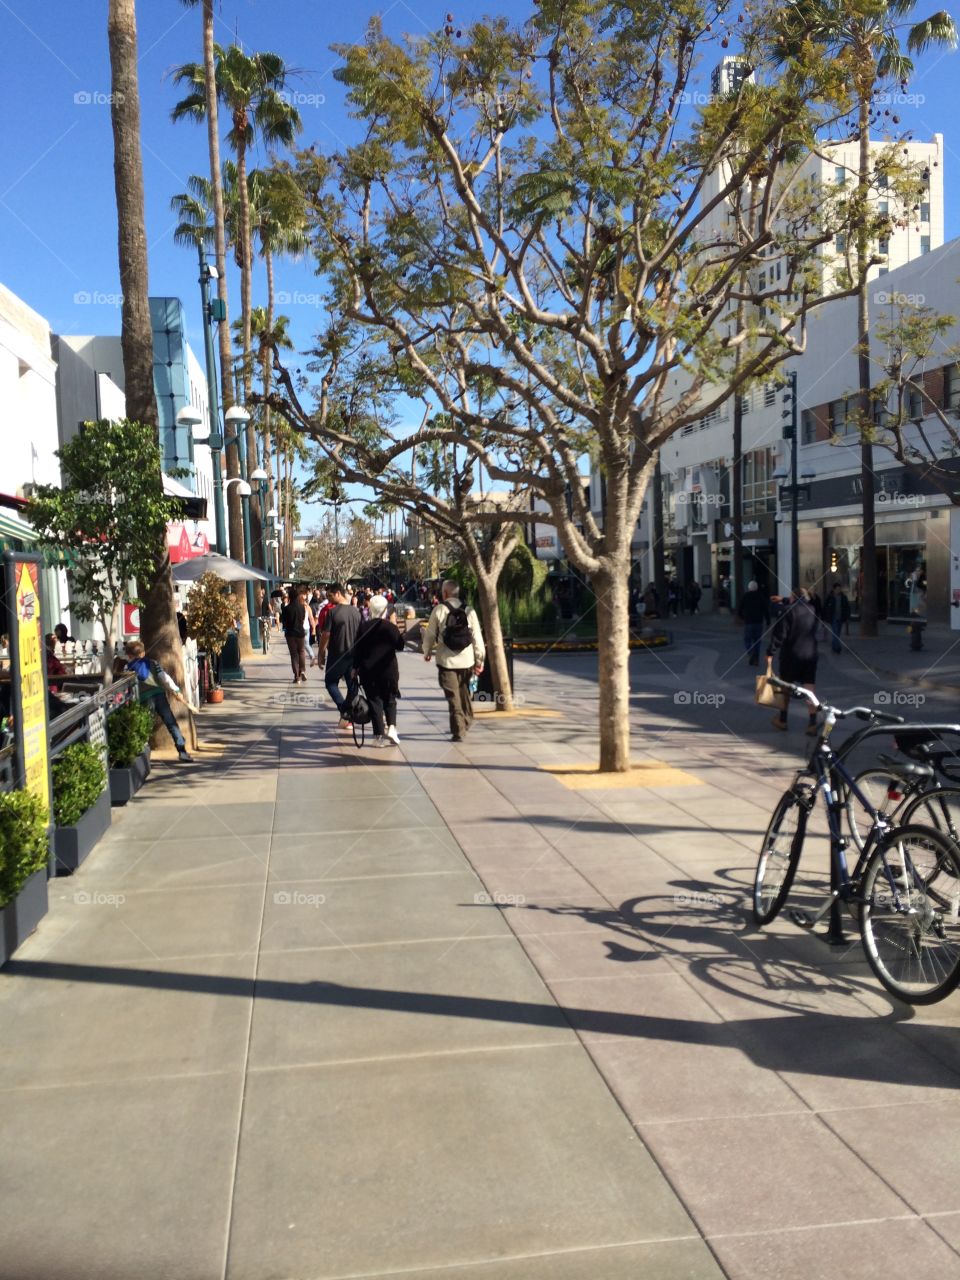 Santa Monica third street promenade